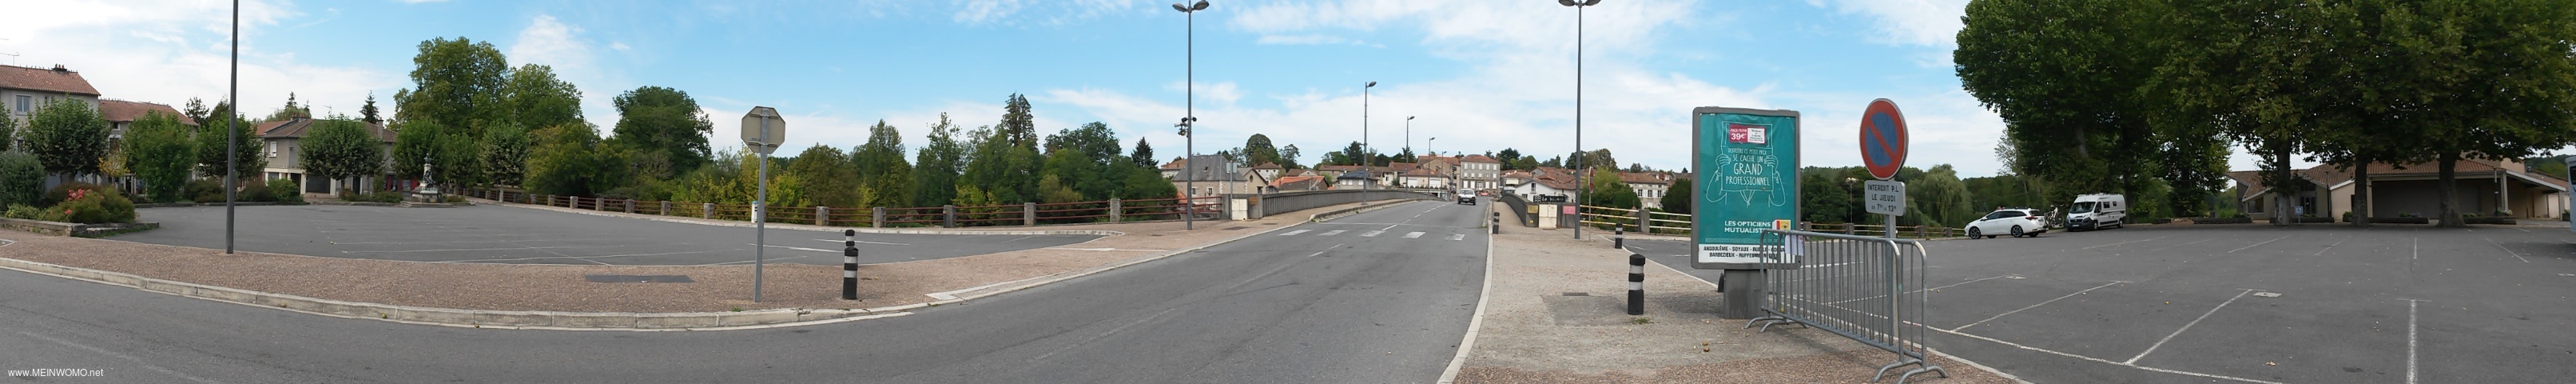  Panorama di Chabanais - Parcheggio